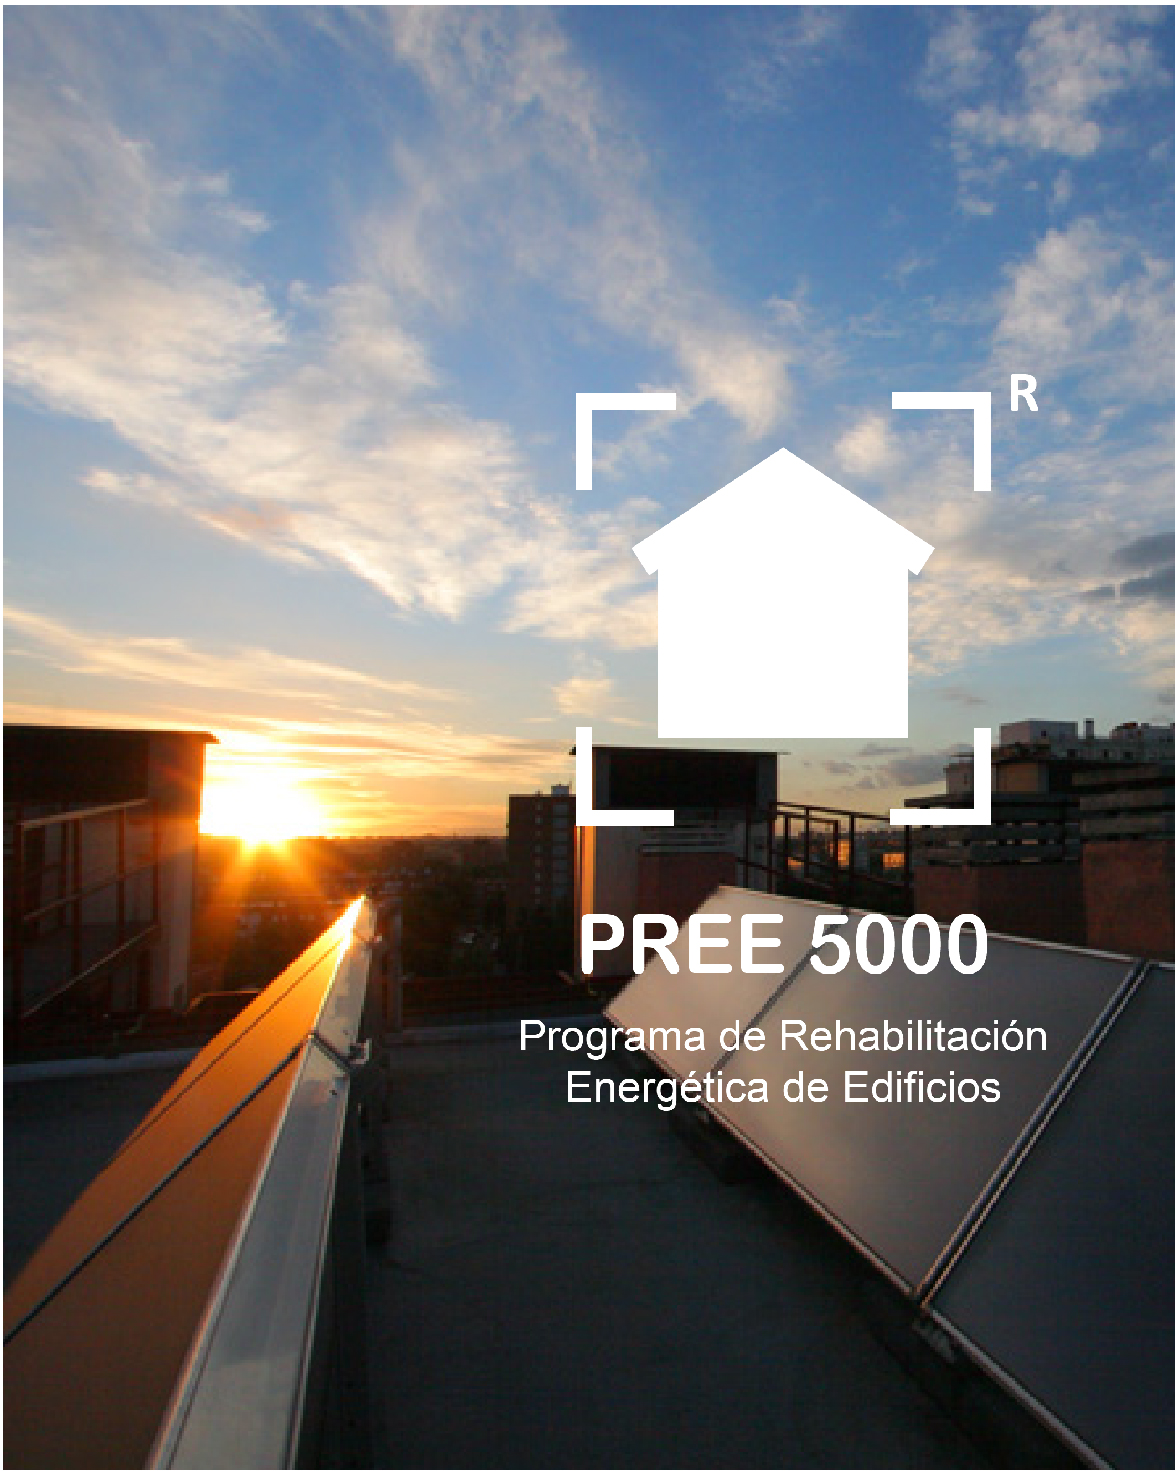 PREE 5000. Rehabilitación energética de edificios en municipios de reto demográfico